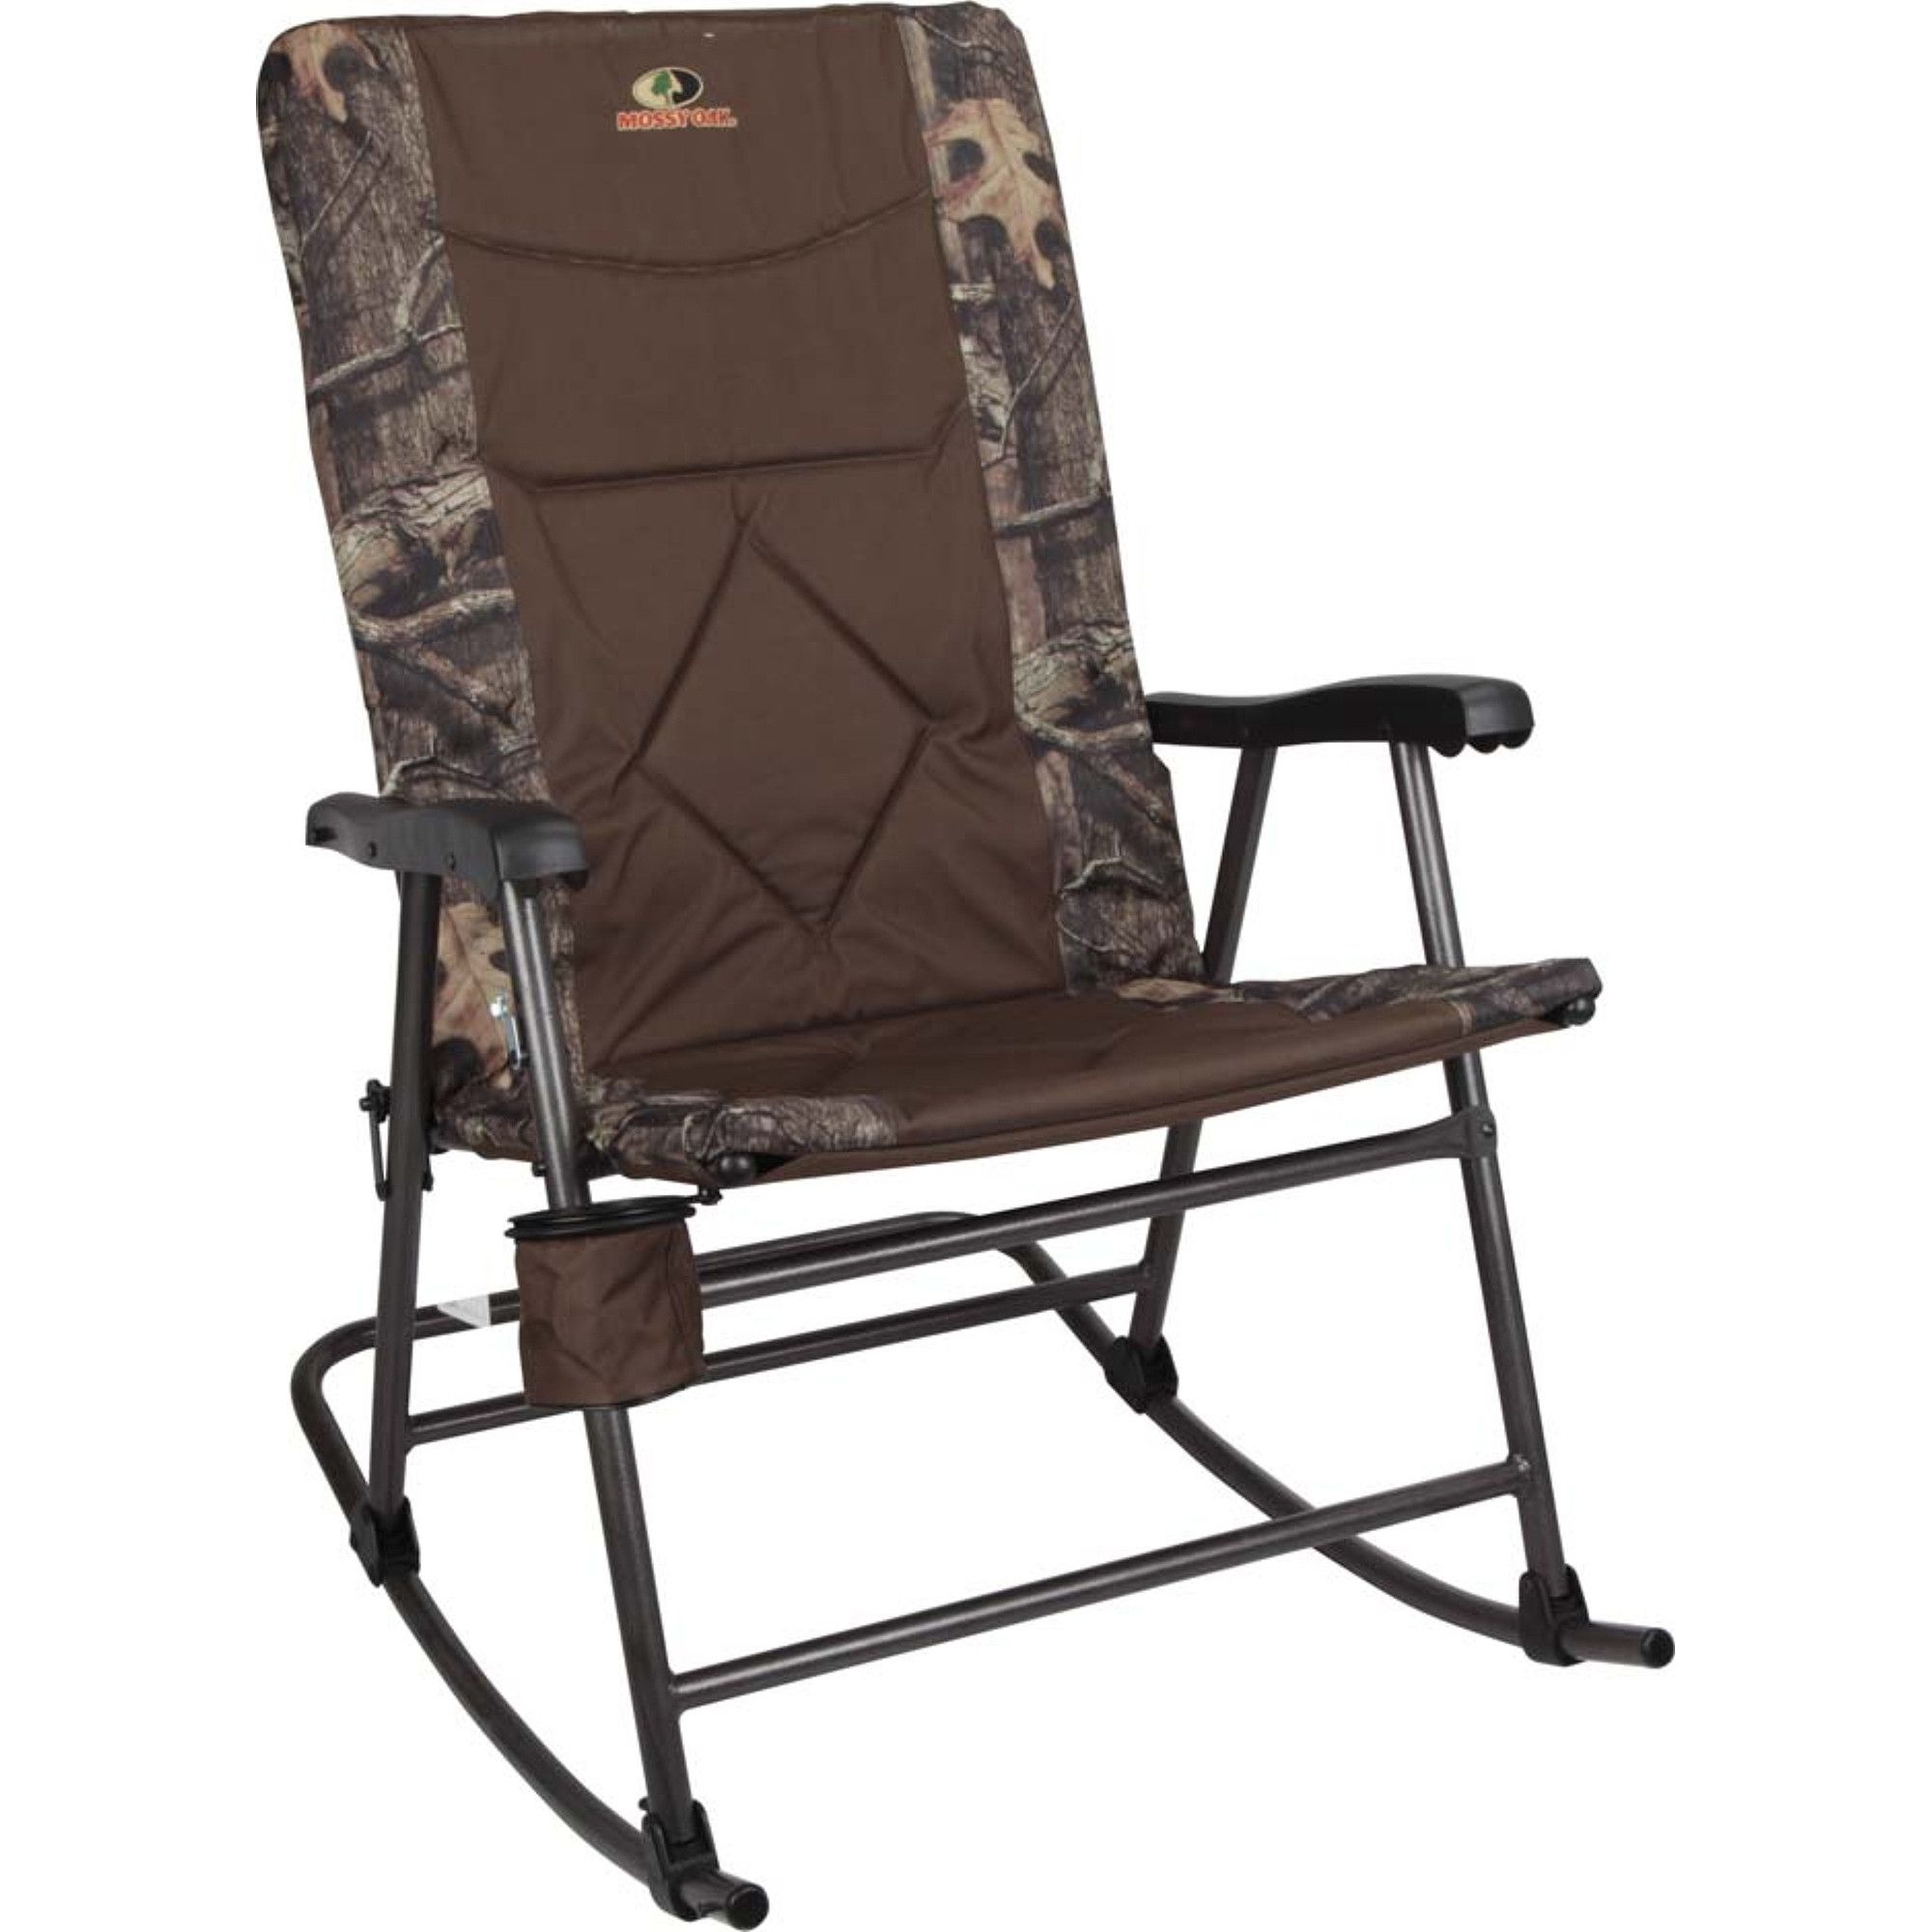 Wayfair Rocking Chair Cushions Outdoor Classy Images Design Regarding Rocking Chairs At Walmart (Photo 10 of 15)